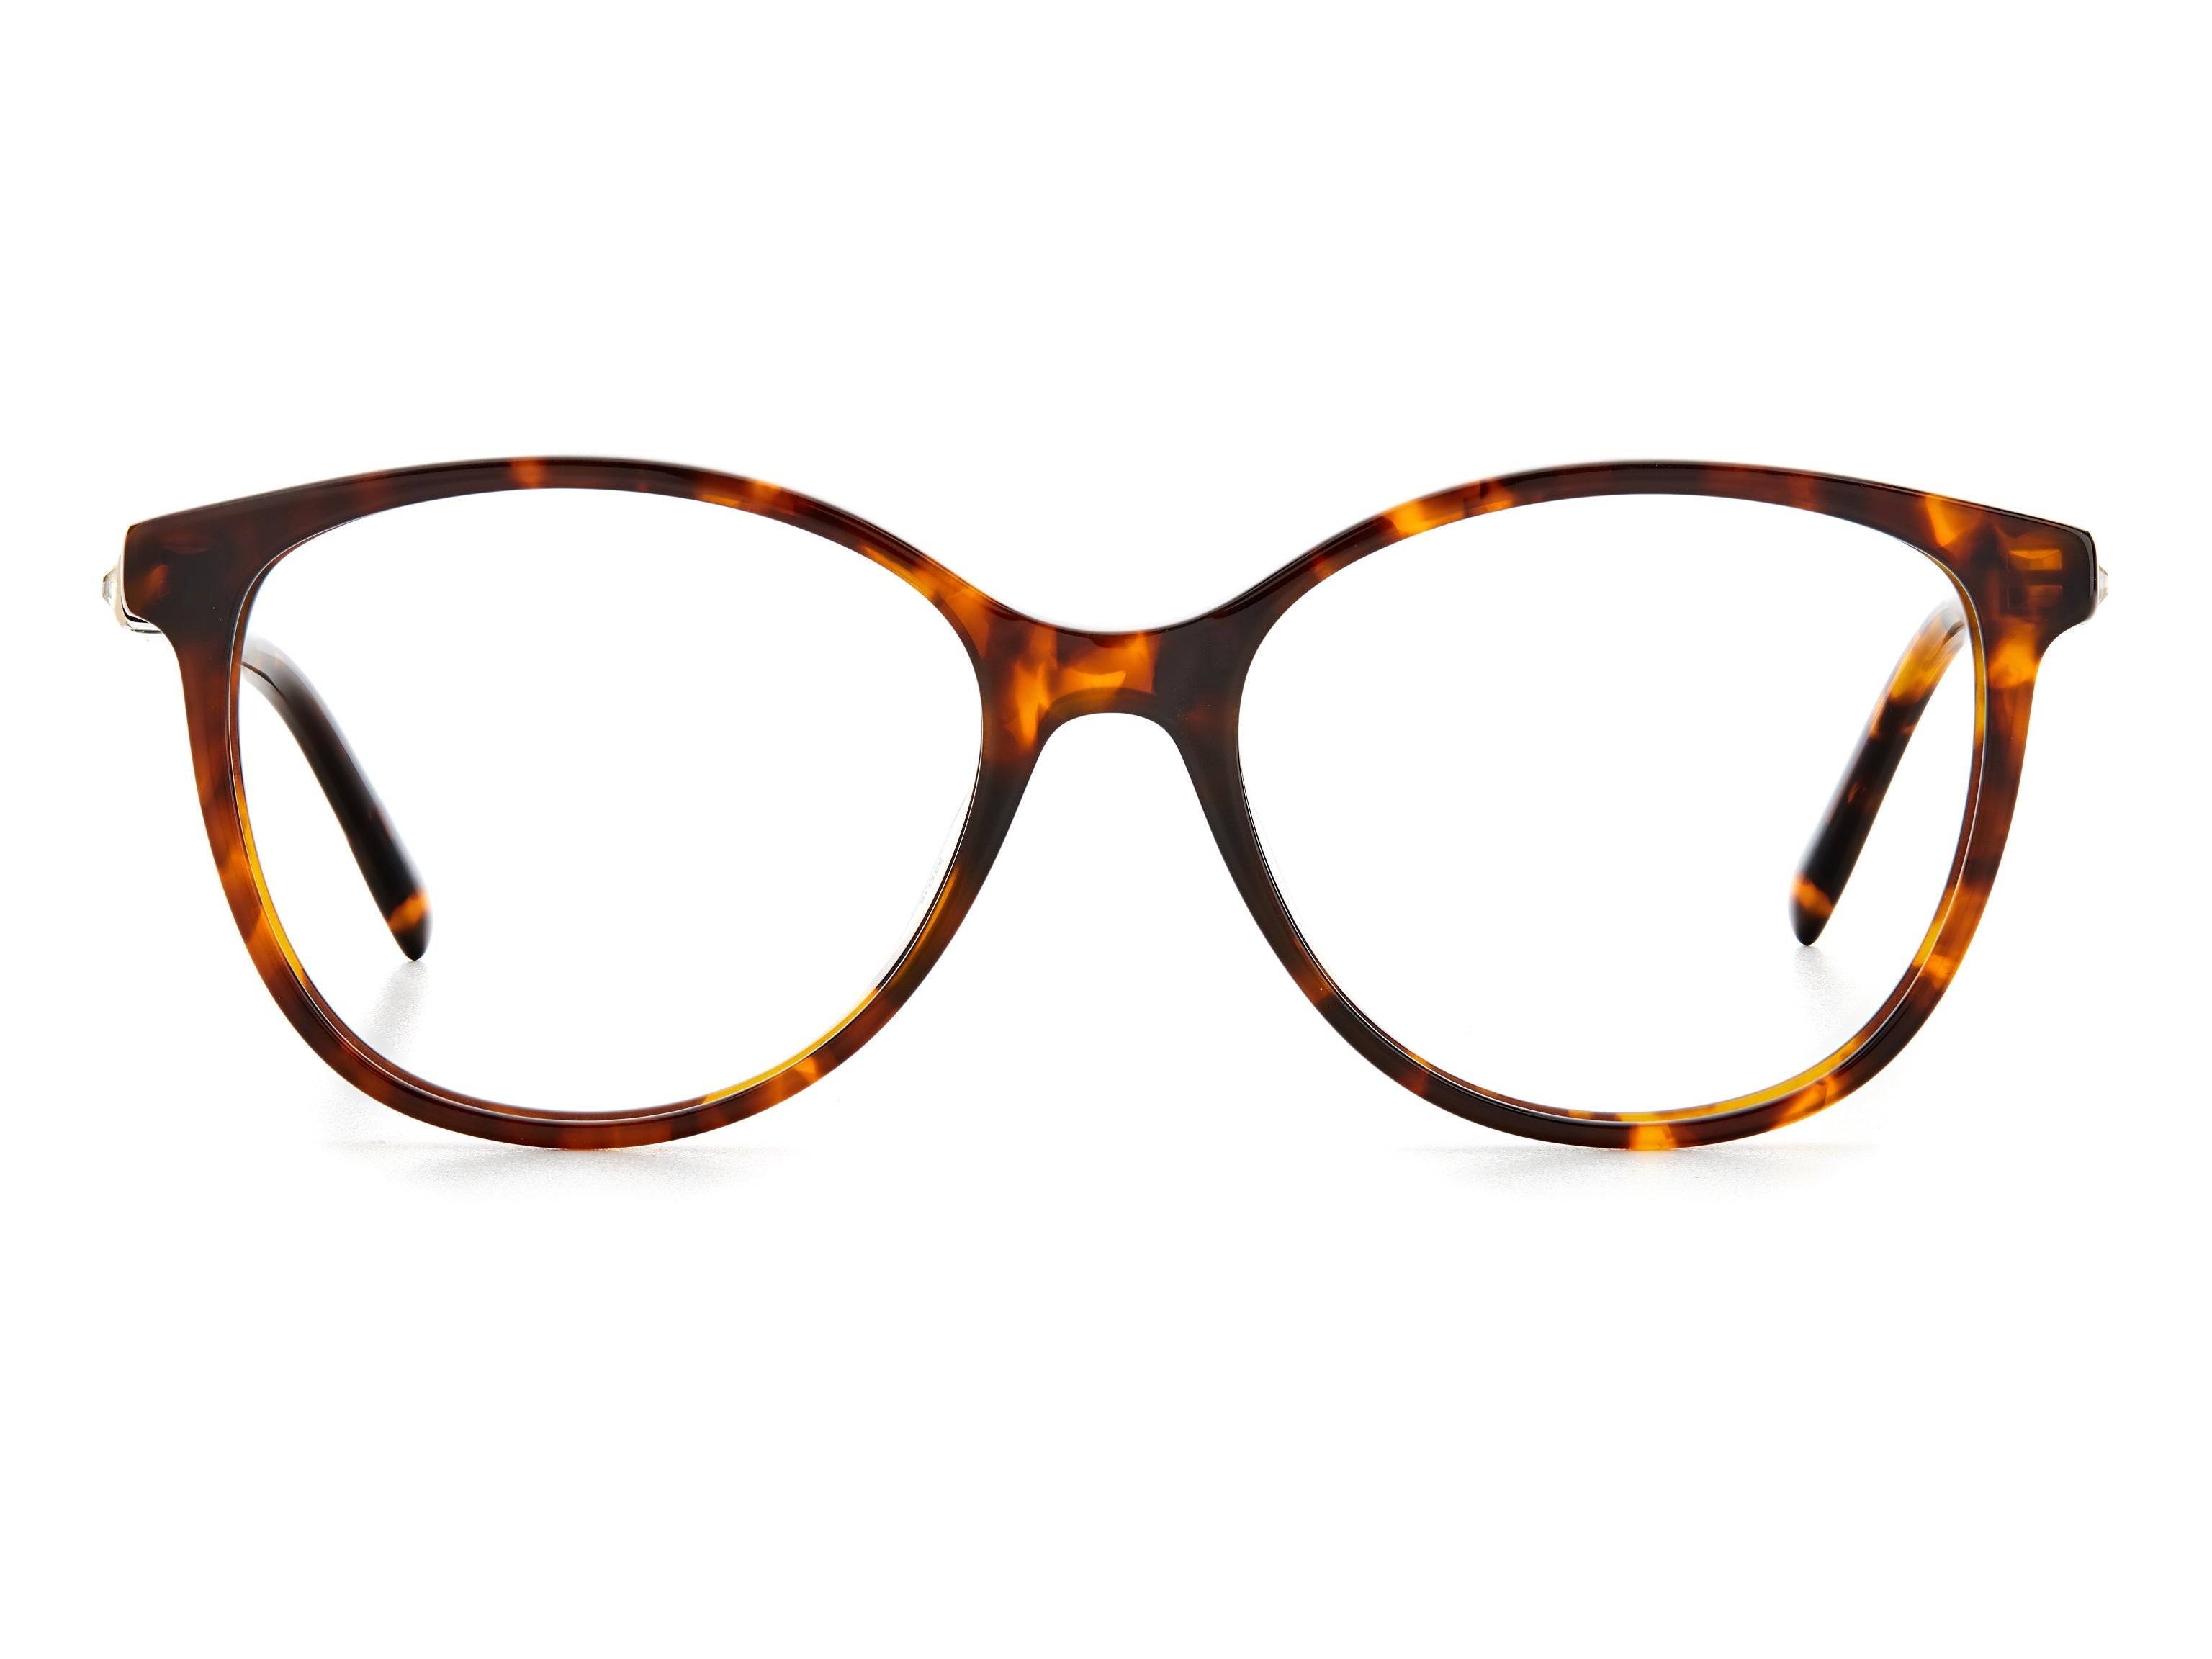 Pierre Cardin Eyeglasses Round Woman